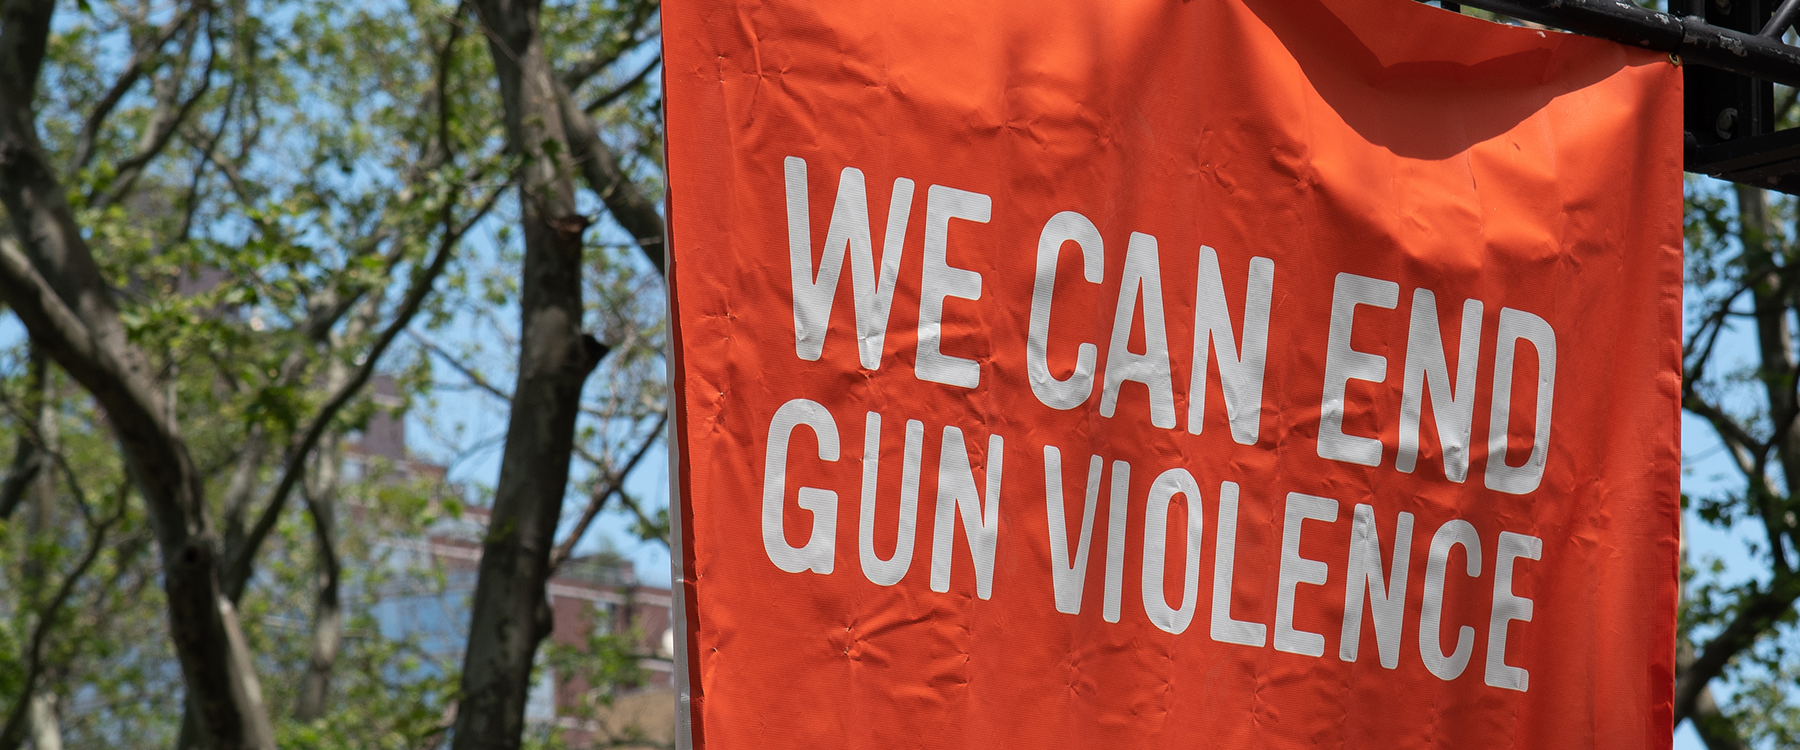 Orange sign that reads "we can end gun violence"